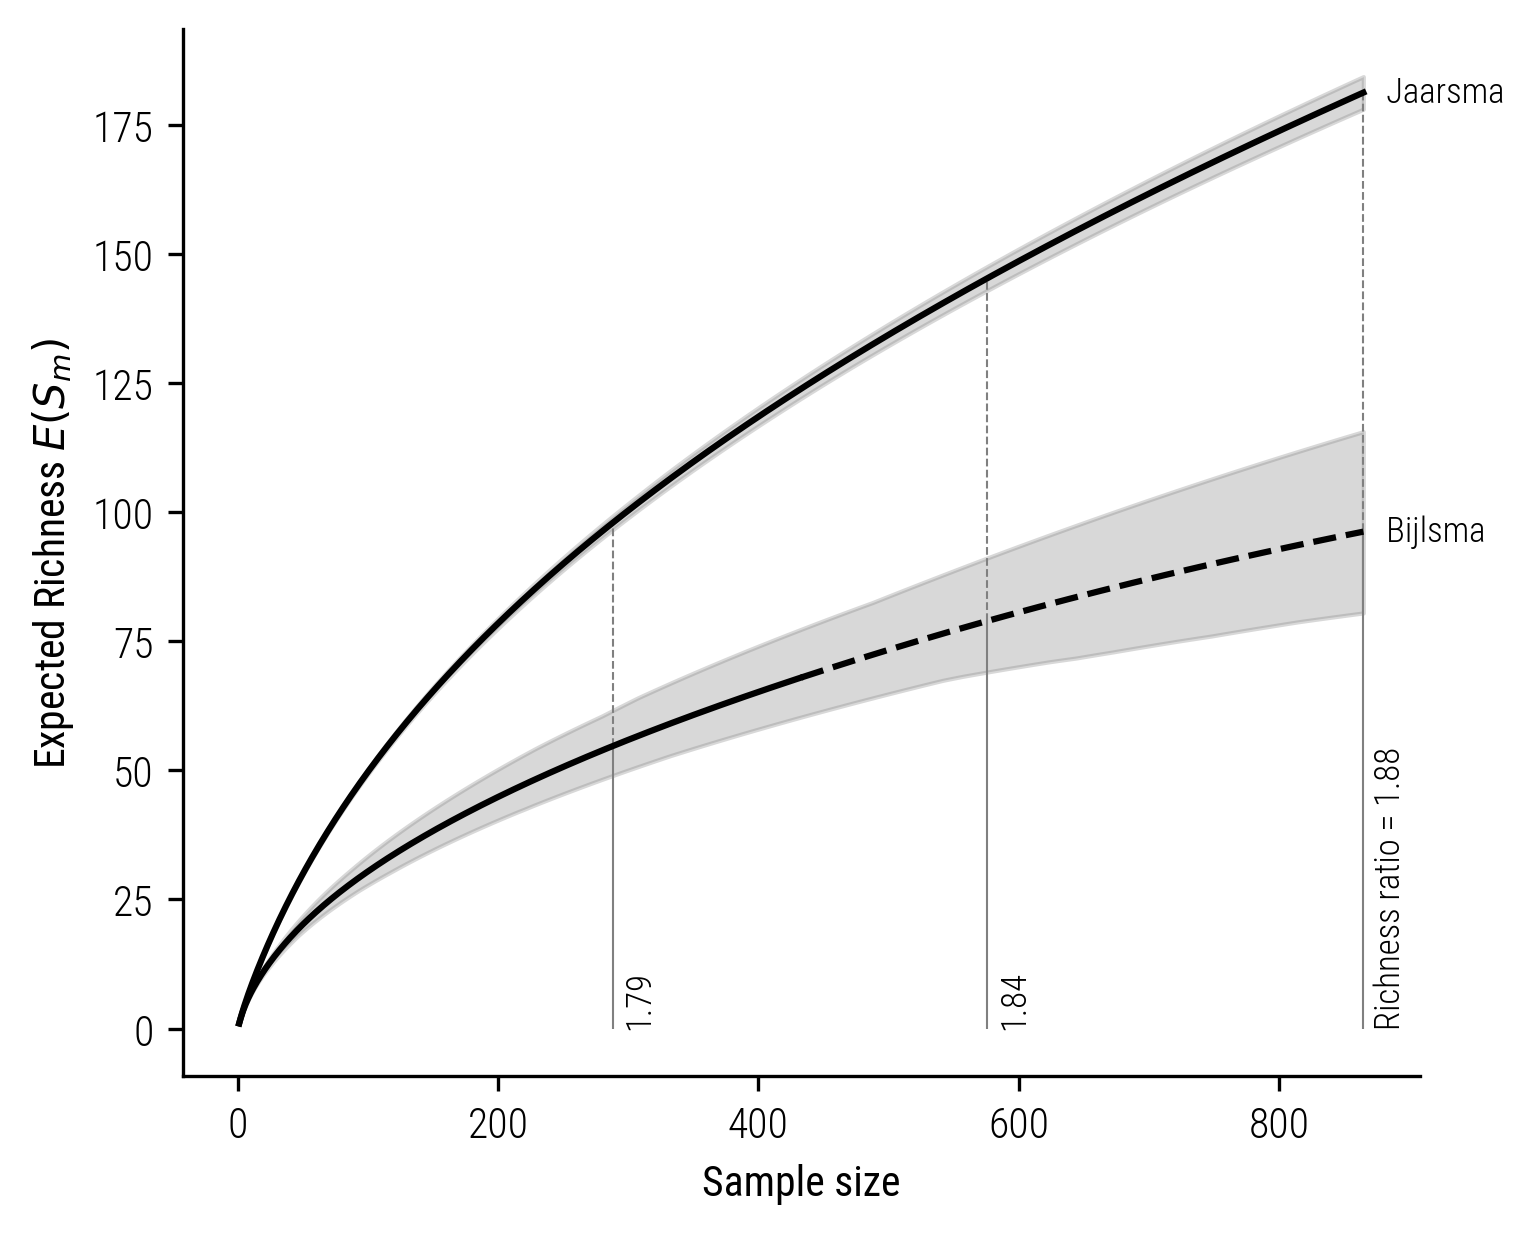 Figure 7: Size-based rarefaction-extrapolation curve for Jaarsma and Bijlsma.